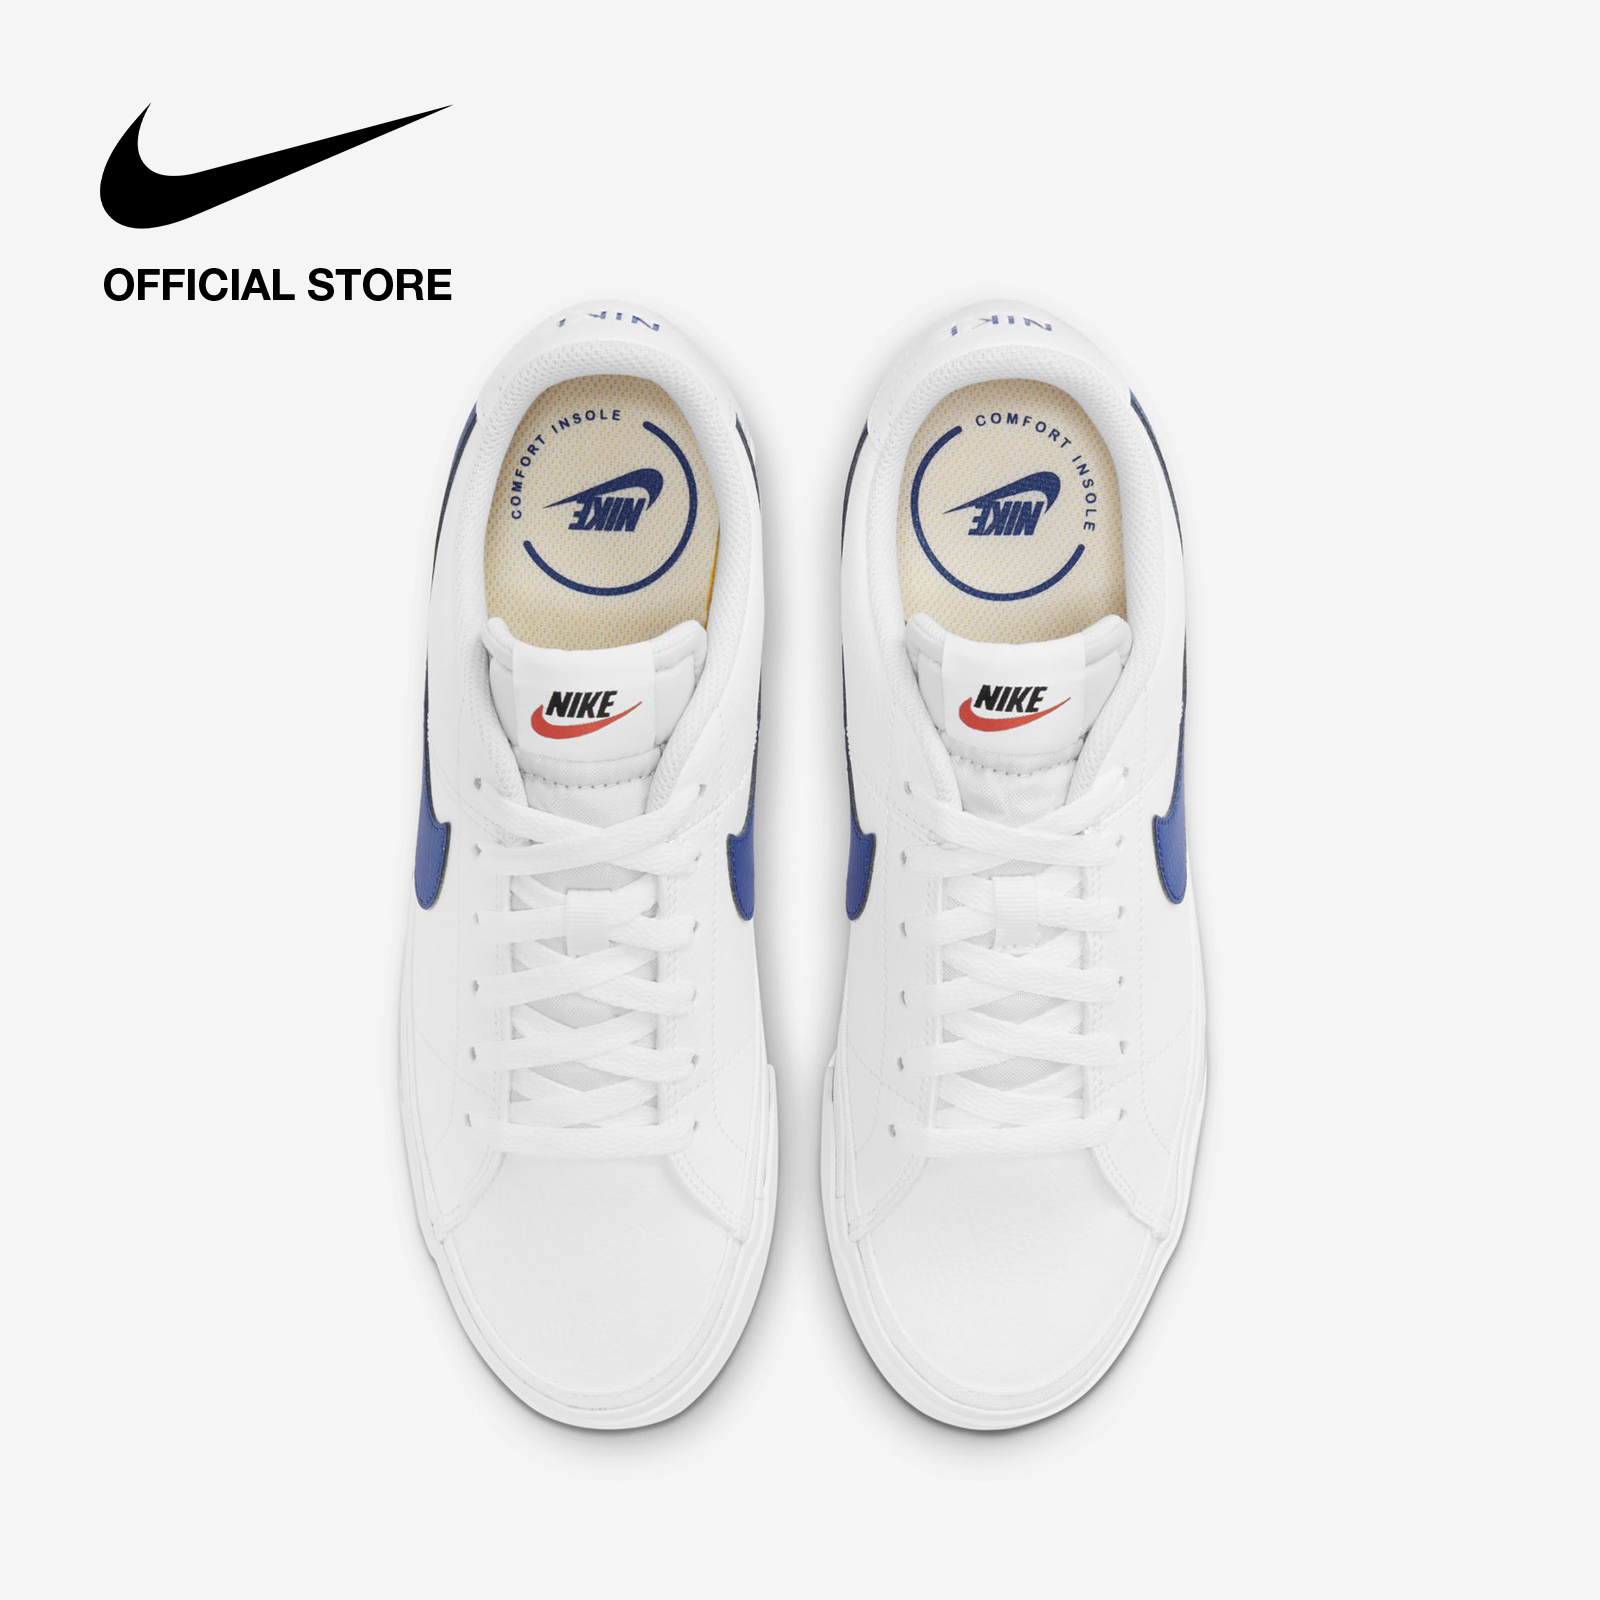 Nike Men's Court Legacy Shoes - White รองเท้าผู้ชาย Nike Court Legacy - สีขาว